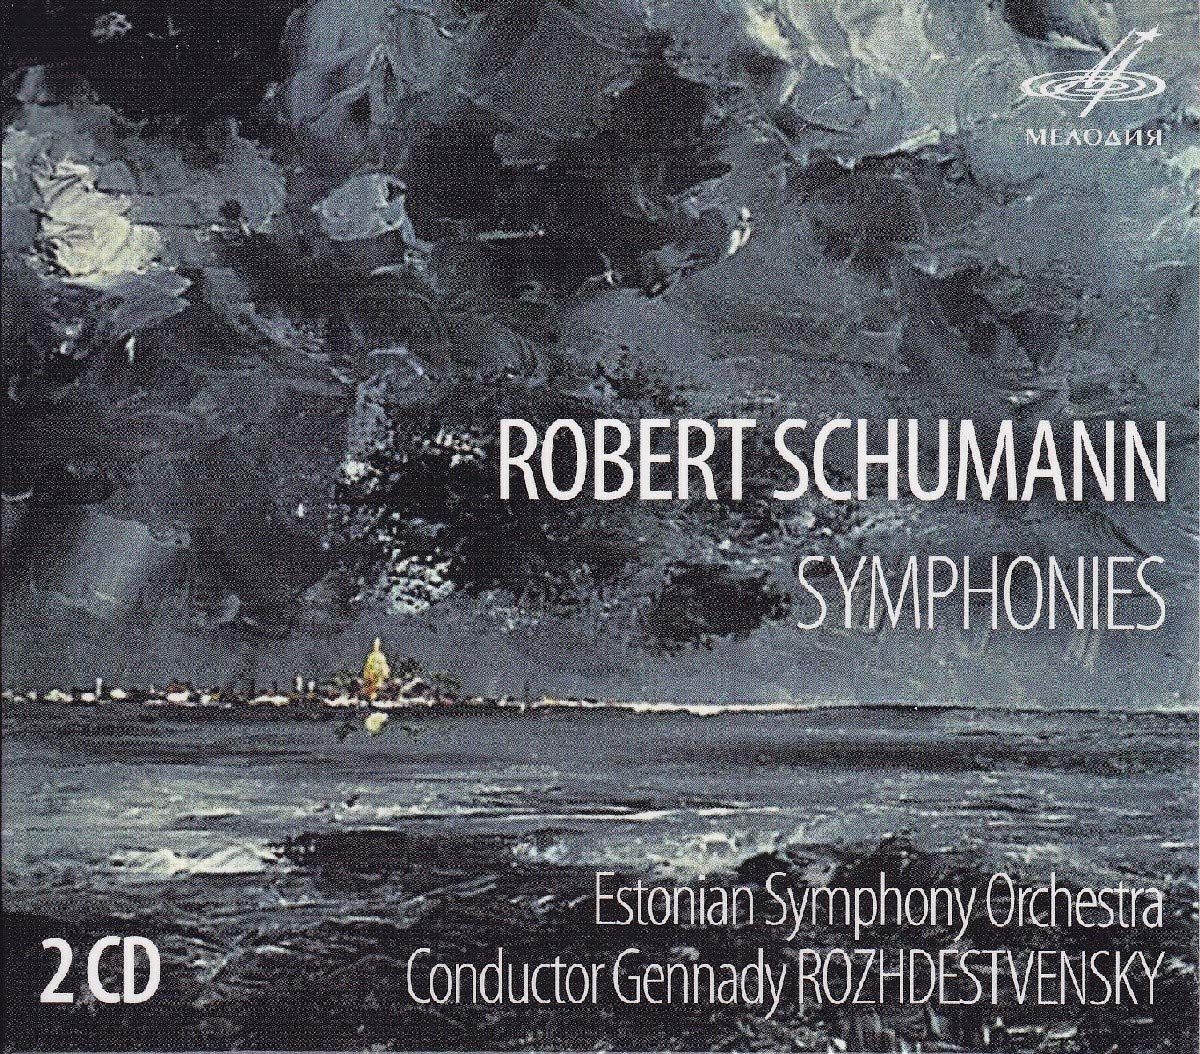 SCHUMANN: Symphonies 1-4 (Ed. by George Szell) - Estonian Symphony Orchestra, G. Rozhdestevensky (2 CDs)